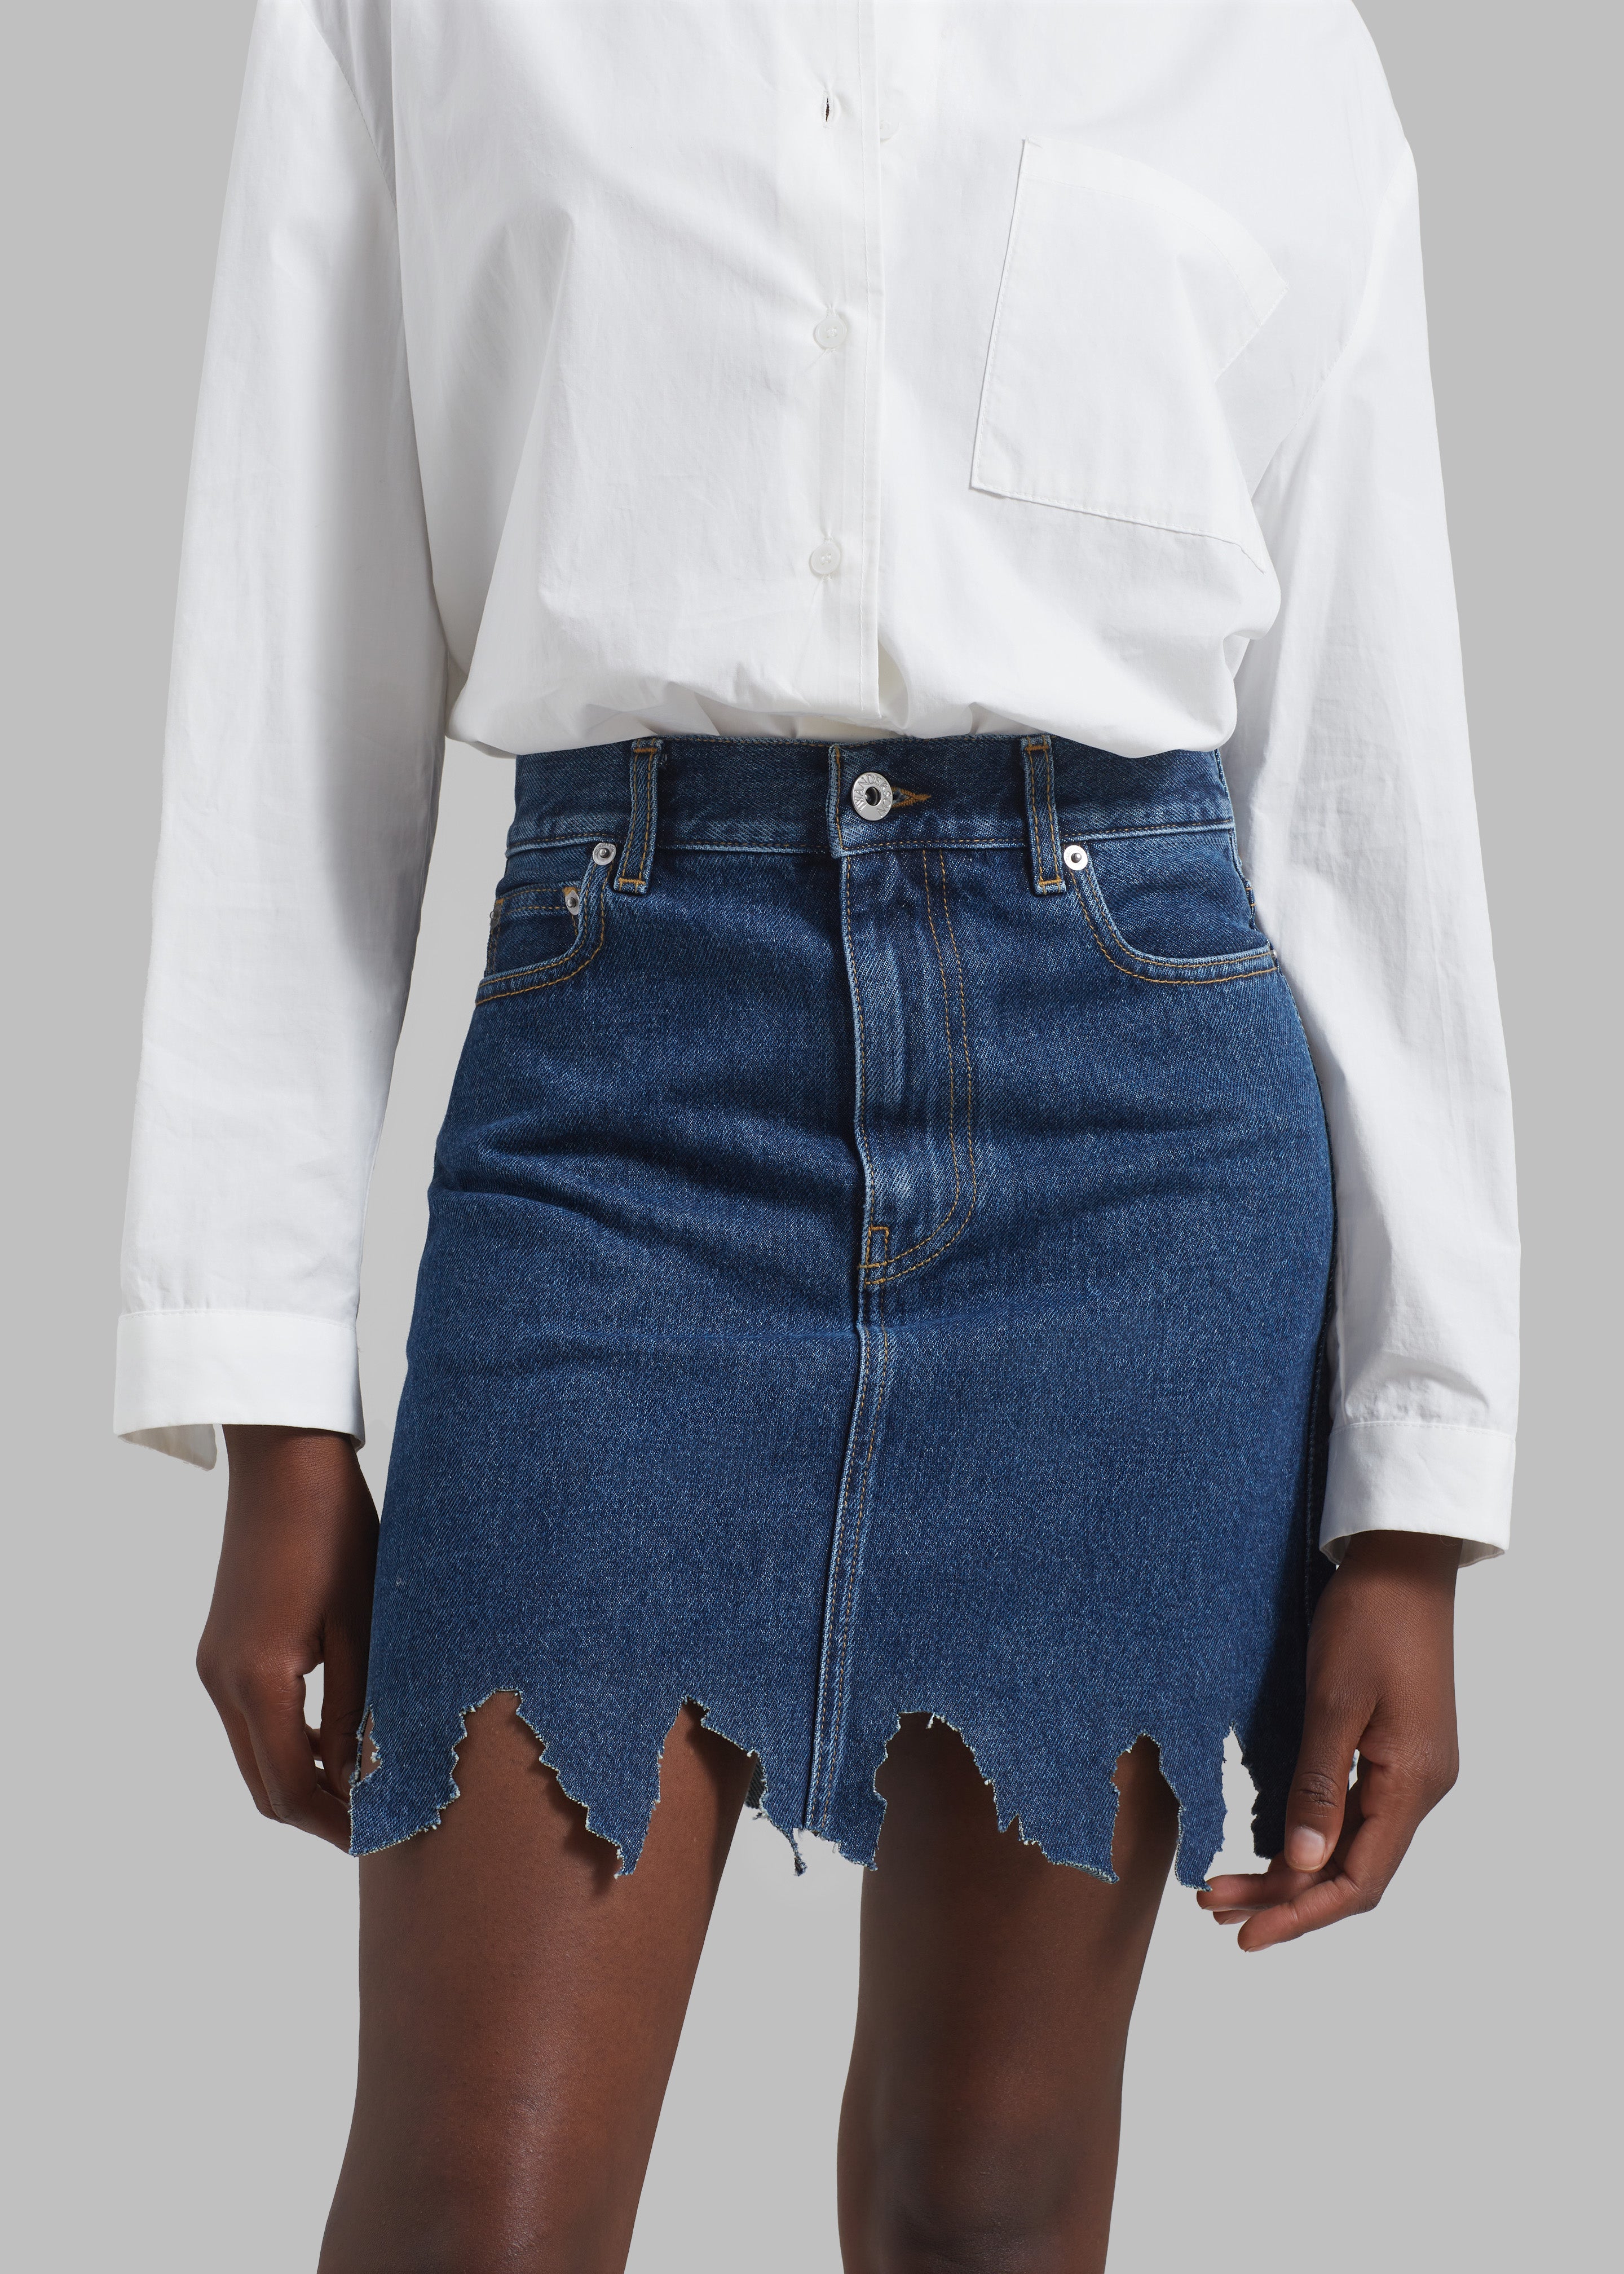 JW Anderson Lasercut Mini Skirt - Indigo - 3